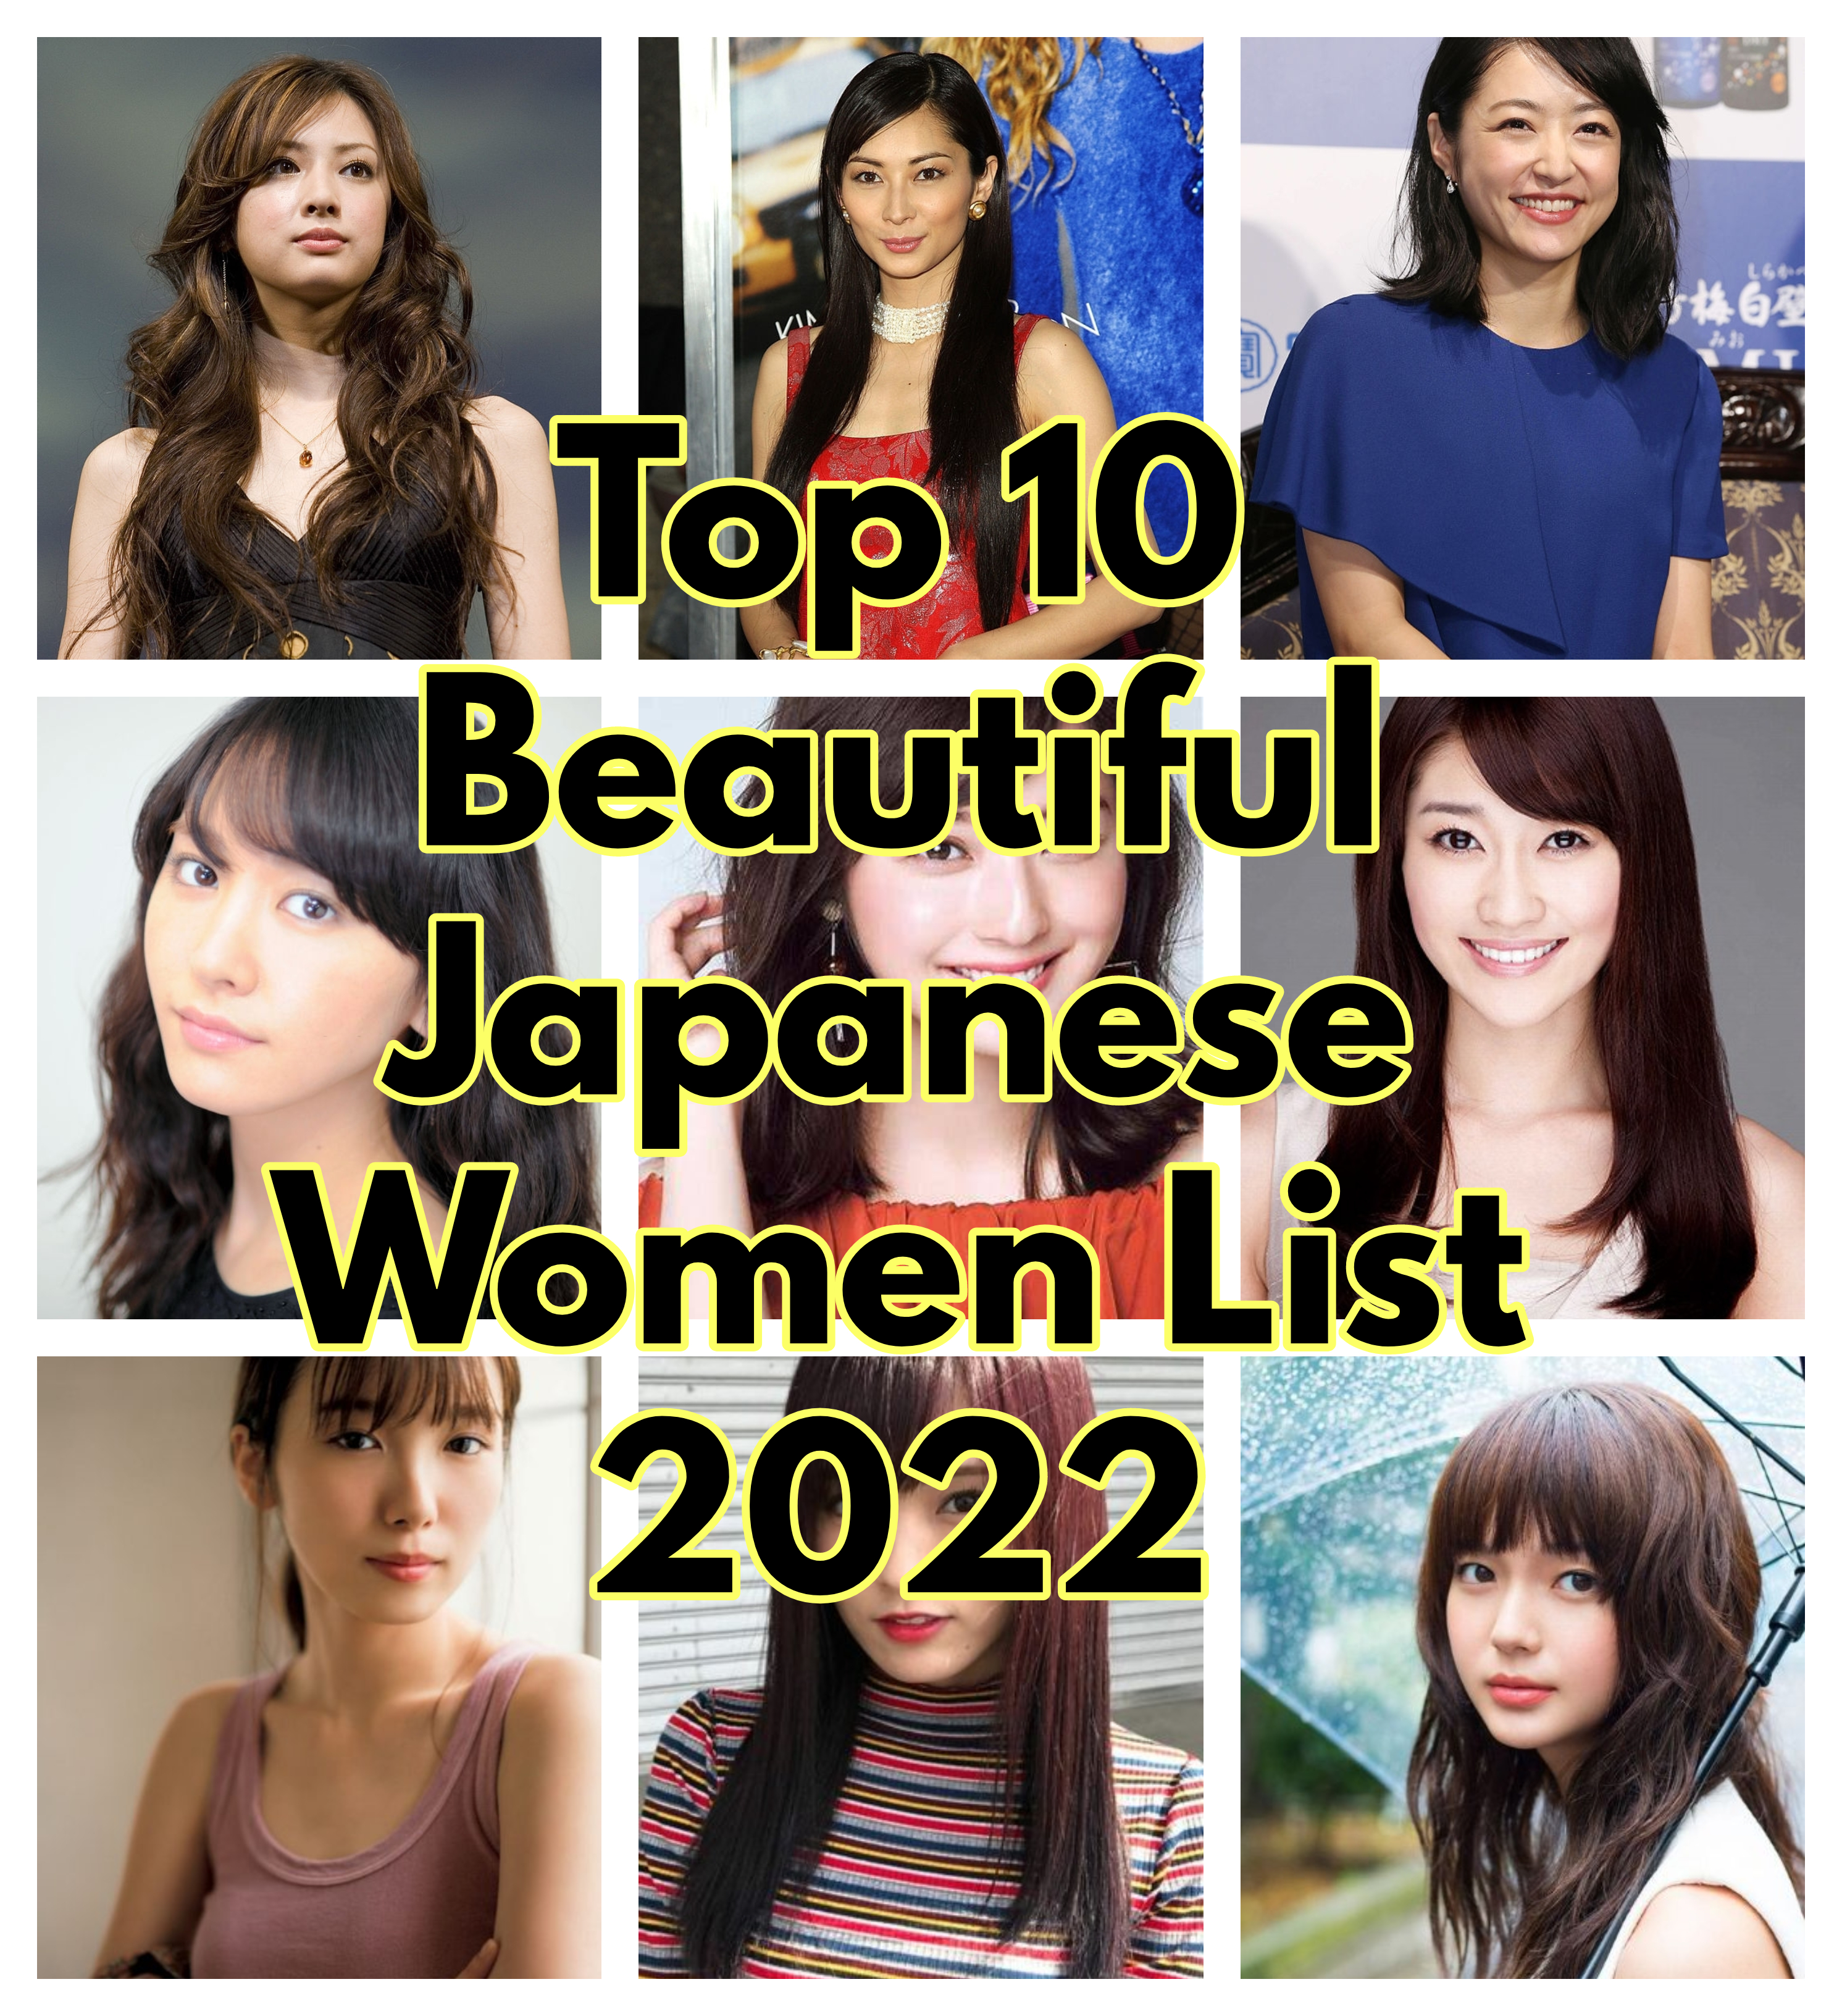 Top 10 Beautiful Japanese Women List 2022